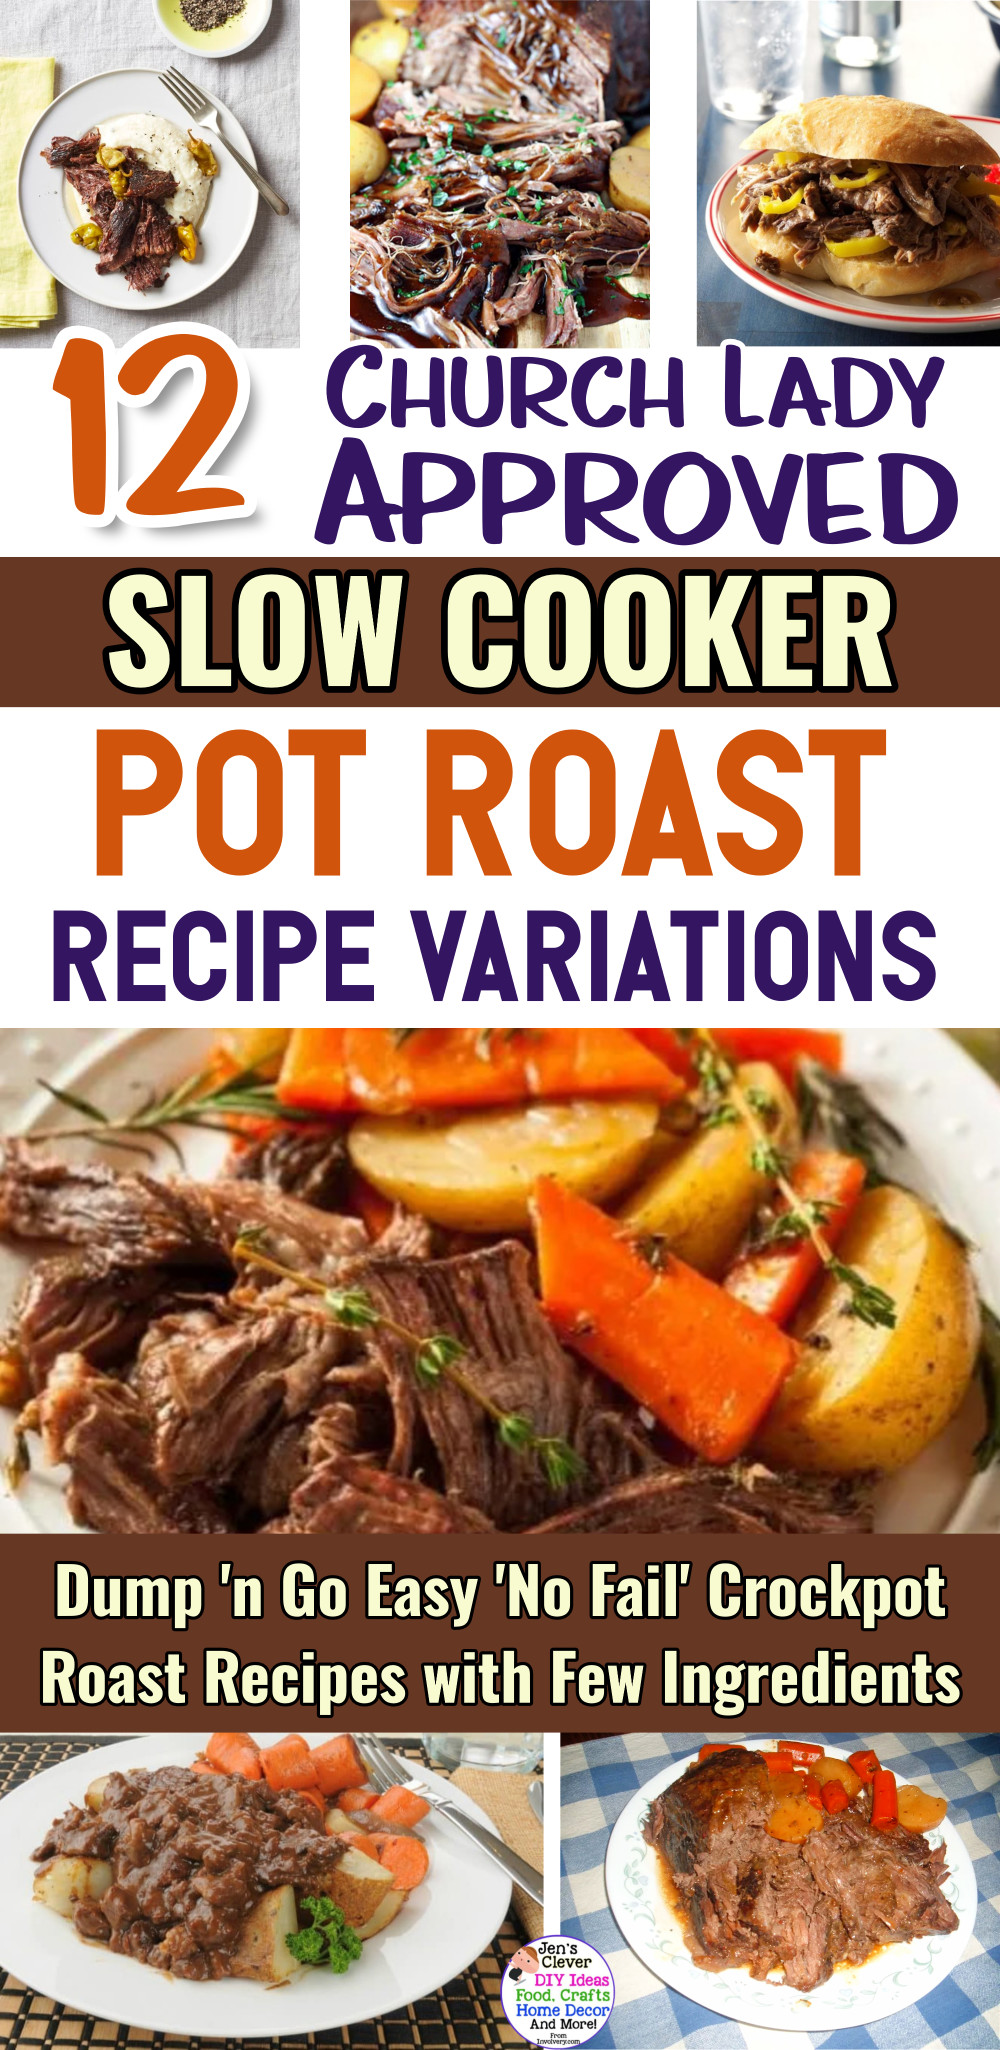 Slow Cooker Pot Roast Recipe Variations